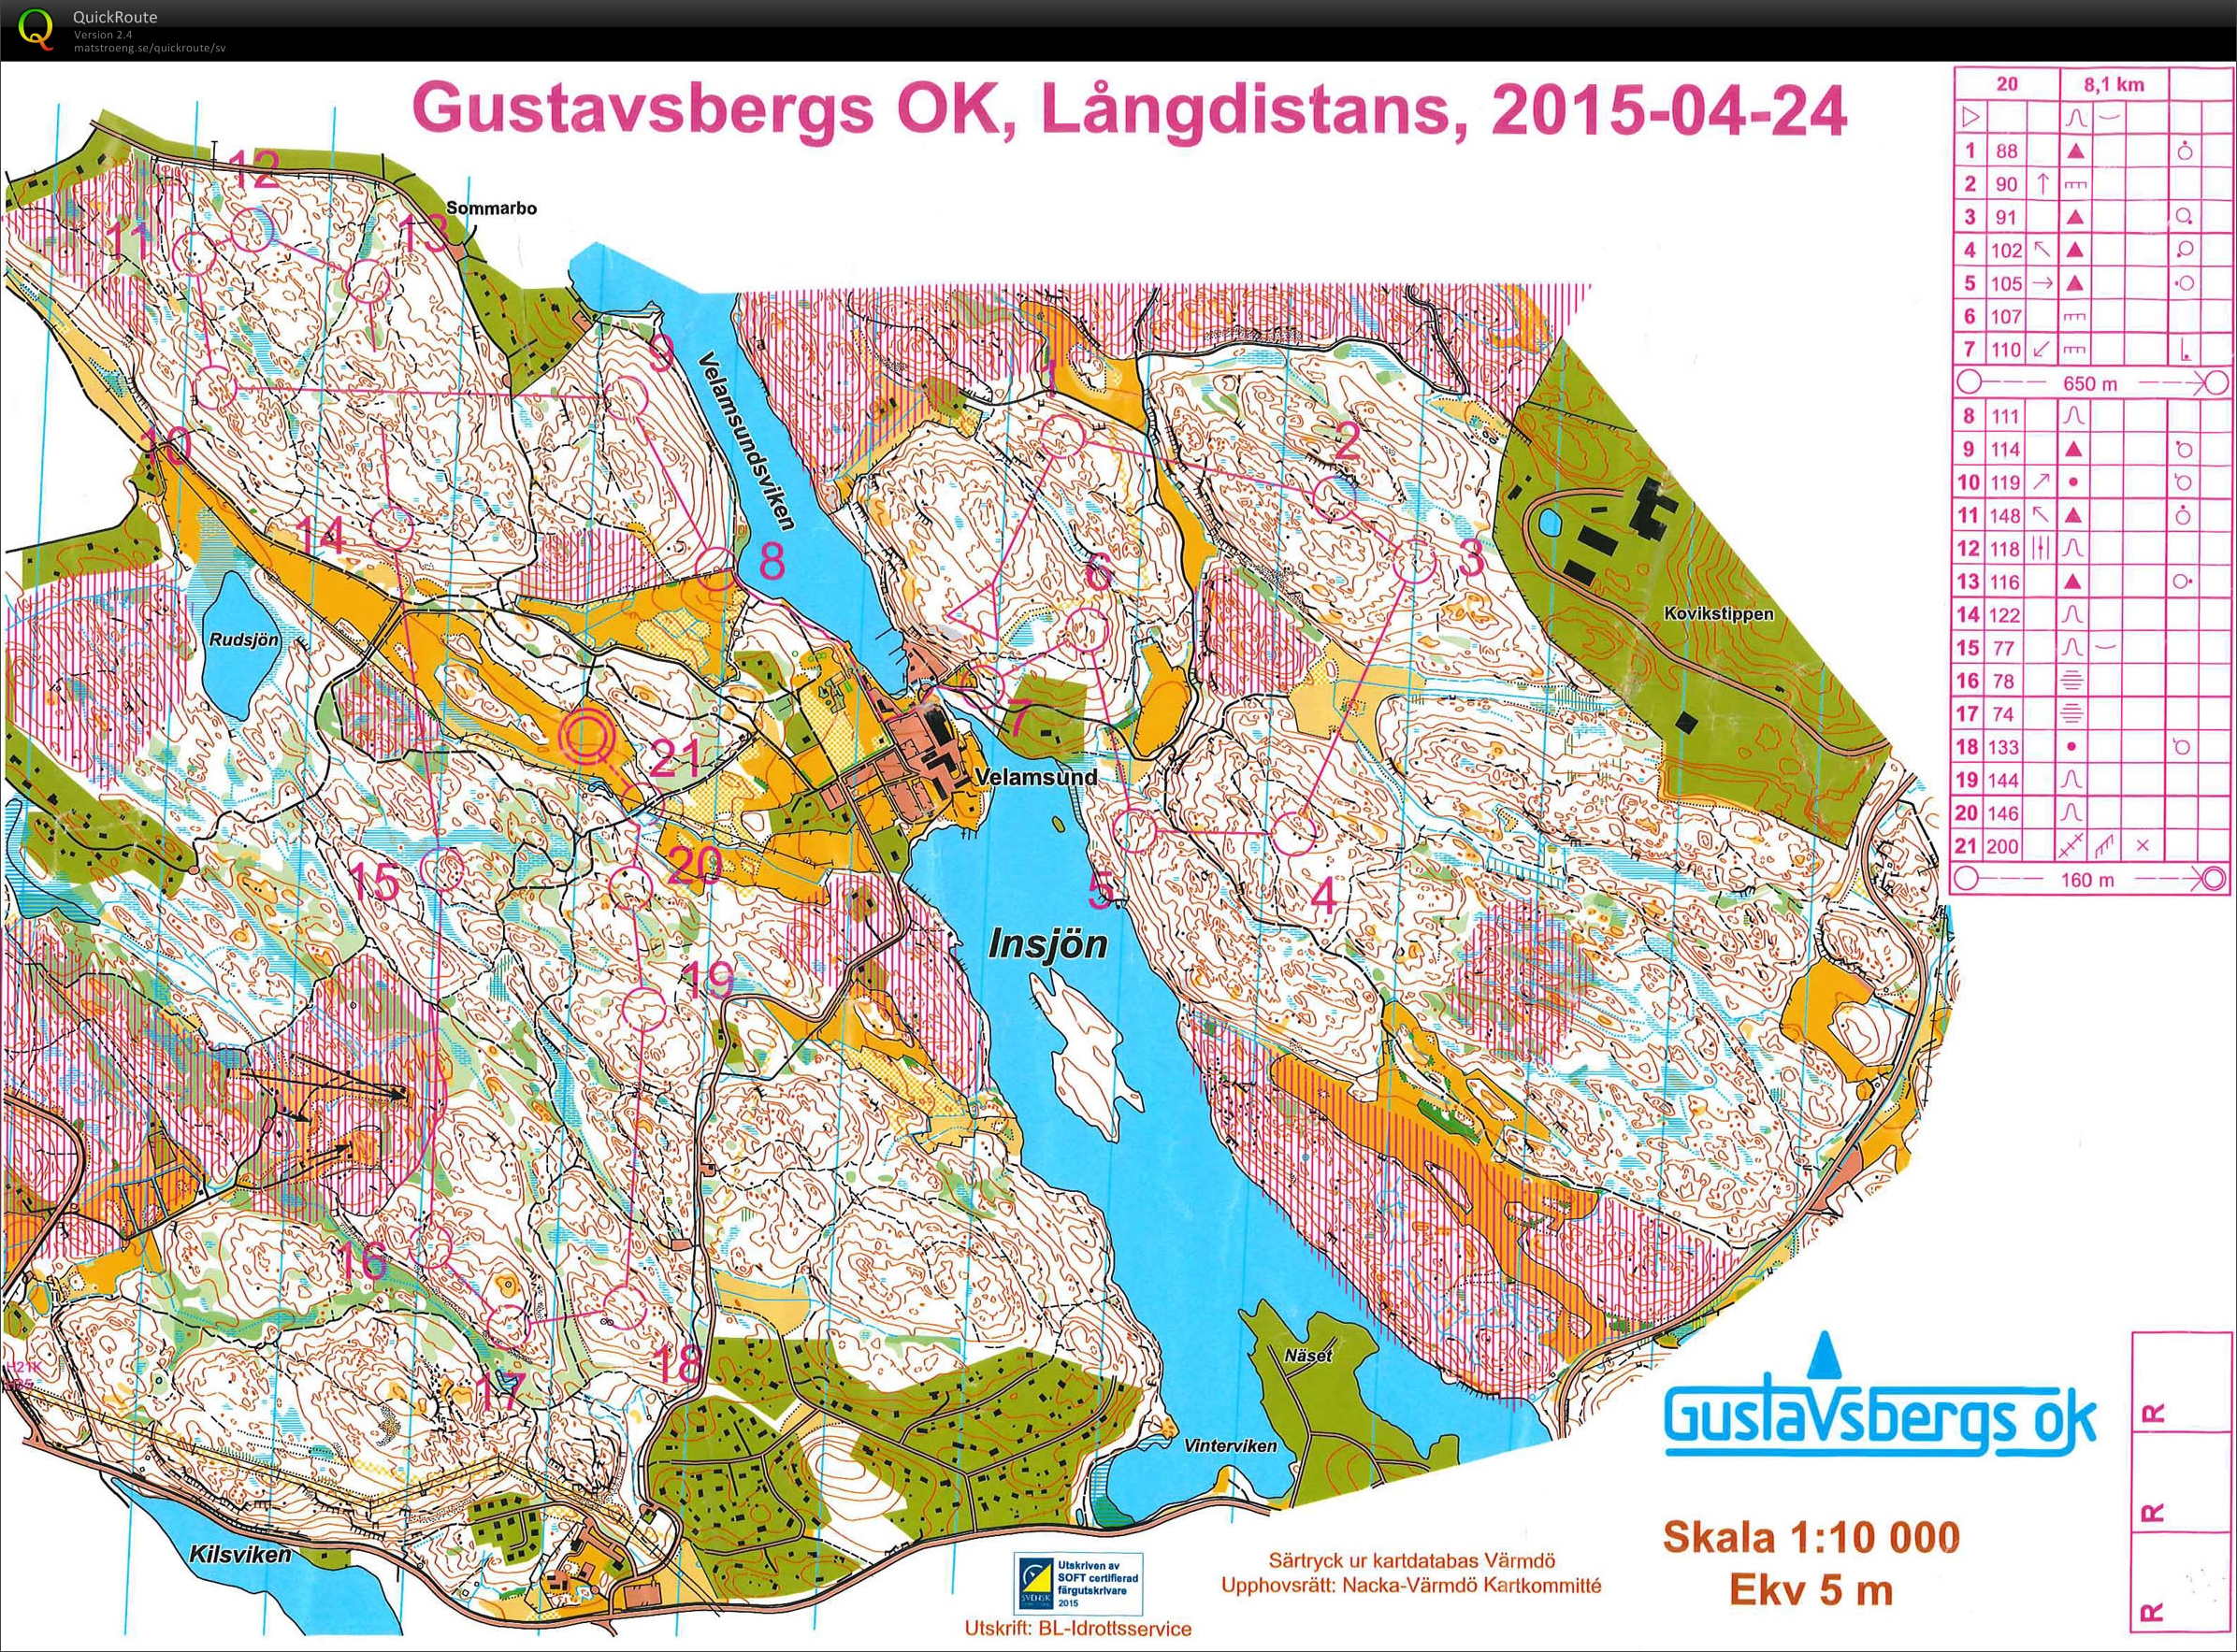 Gustavsbergs OK långdistans (25/04/2015)